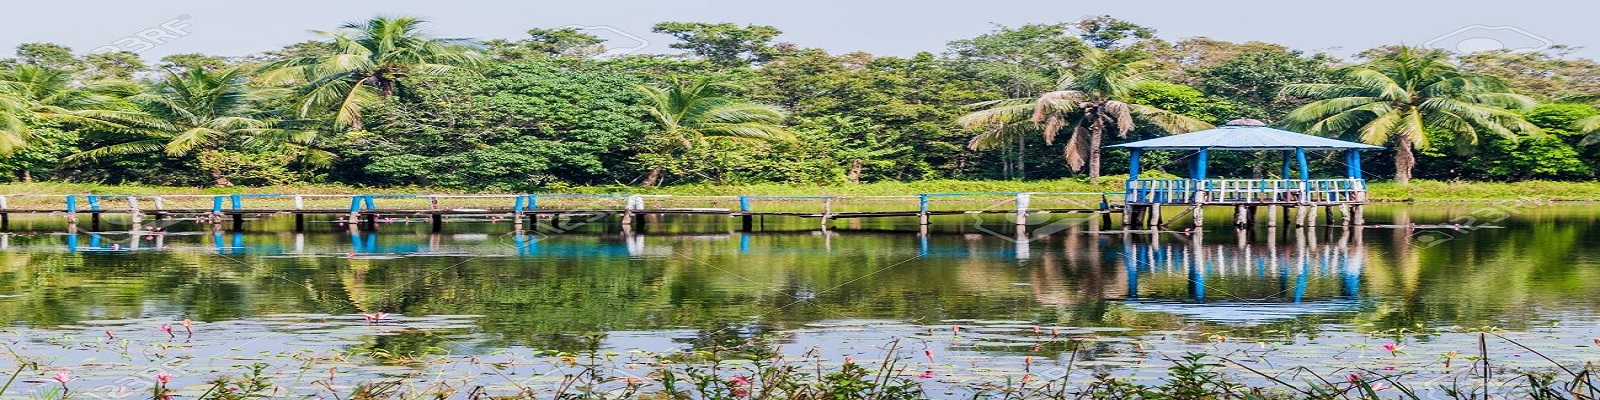 mall pond in harbaria eco park in sundarbans bangladesh 1628590616 1629186679